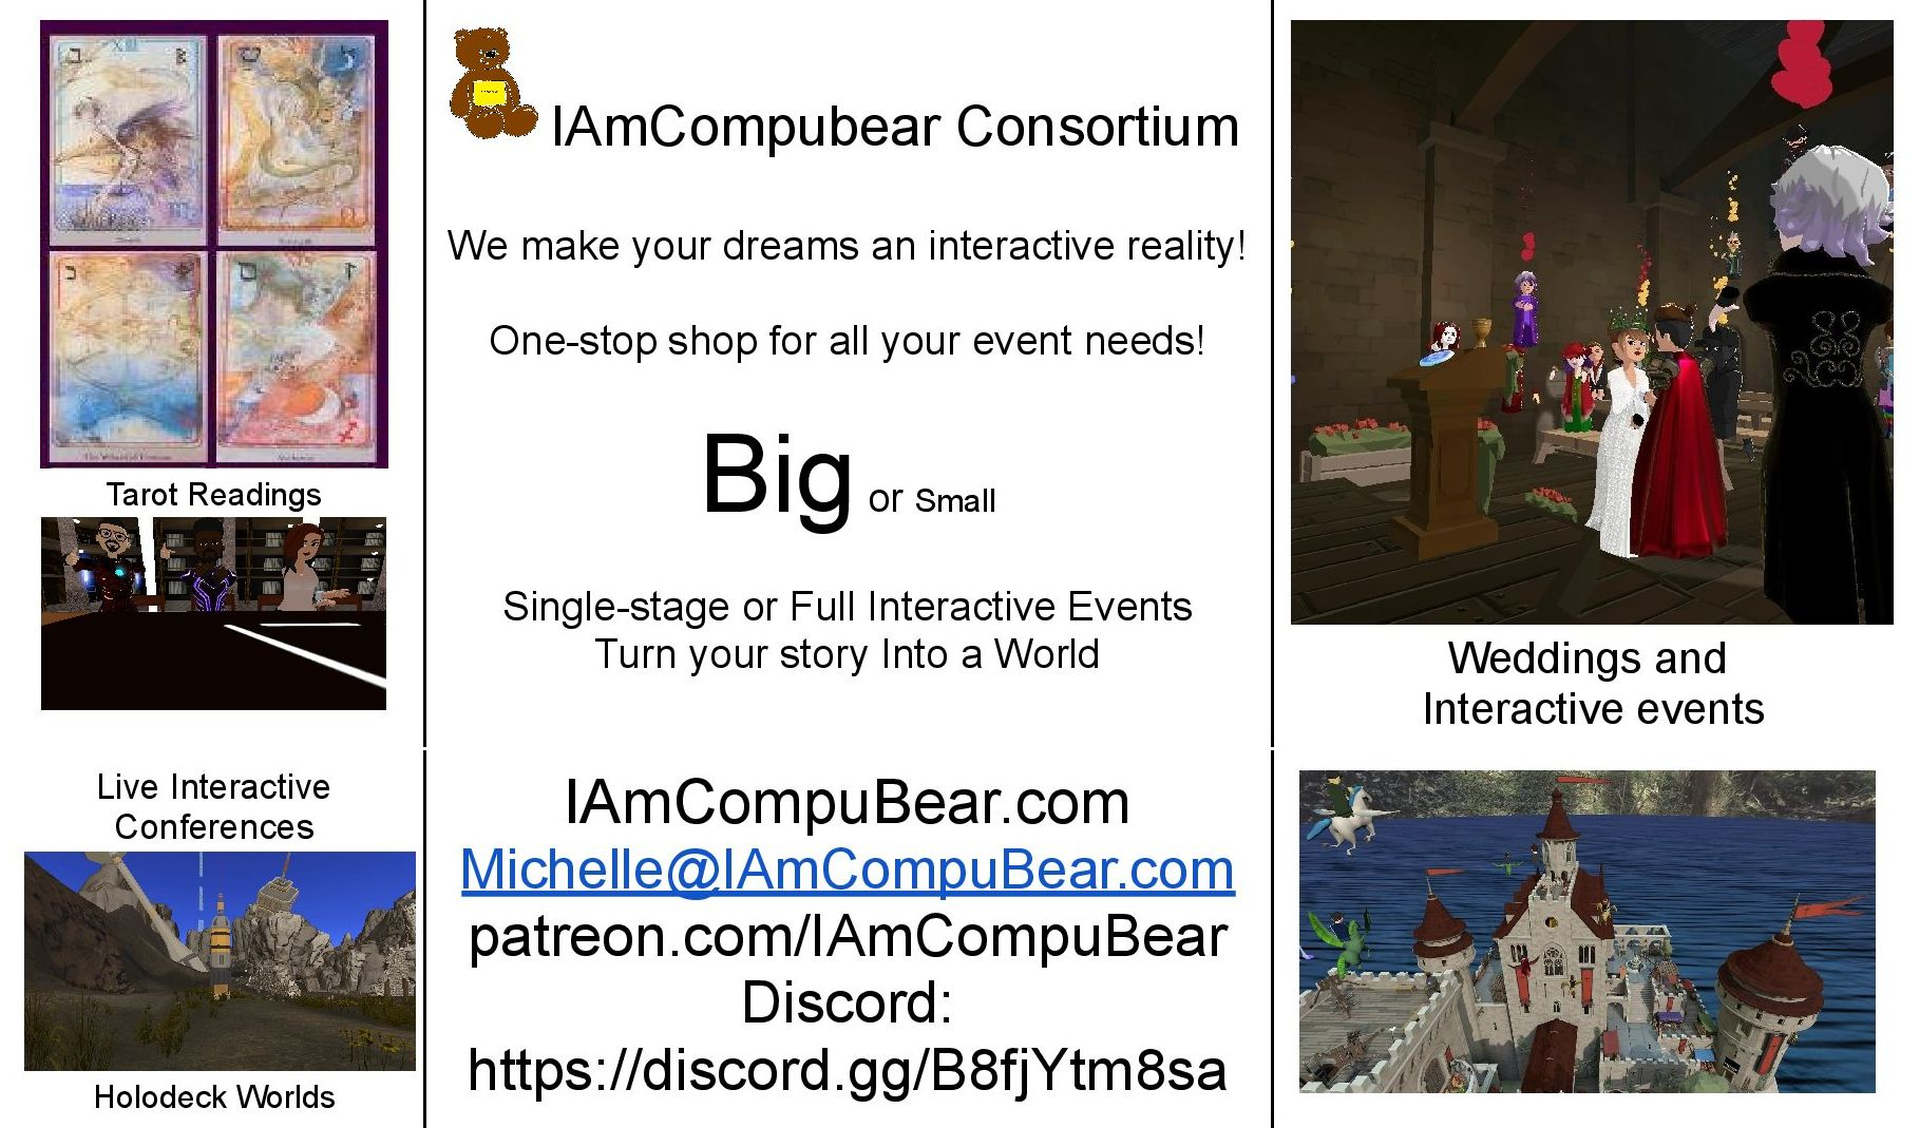 Iamcompubear Consortium poster 